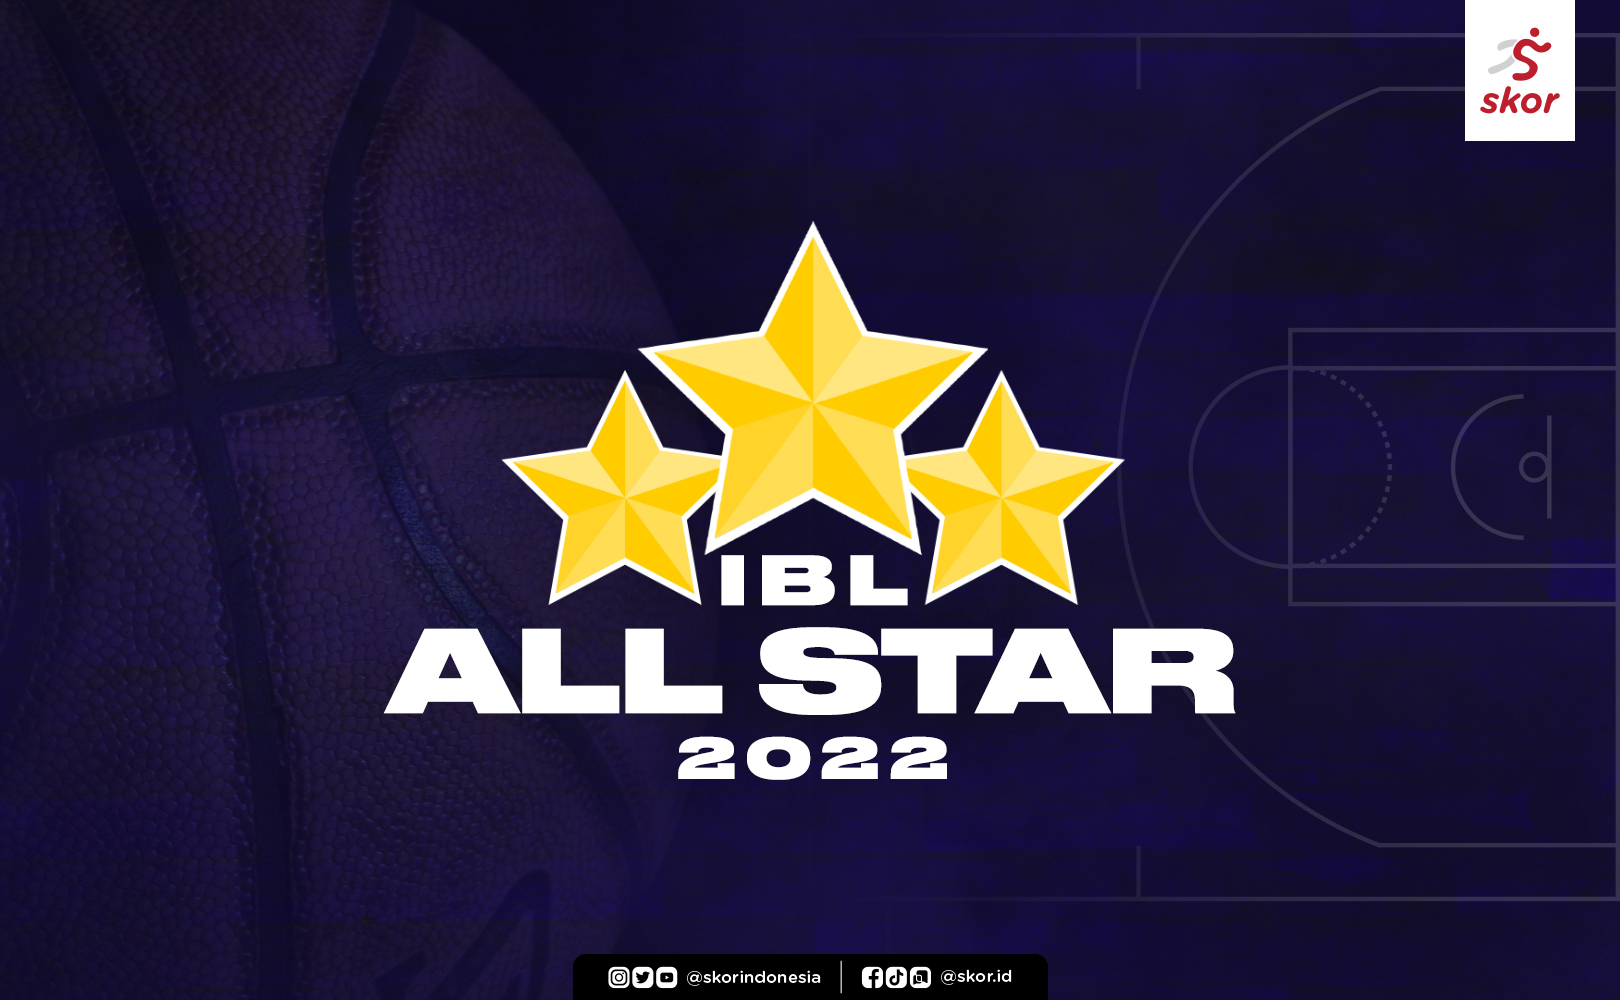 IBL All Star 2022 Bisa Dihadiri 50 Persen Kapasitas Penonton Hall Basket GBK